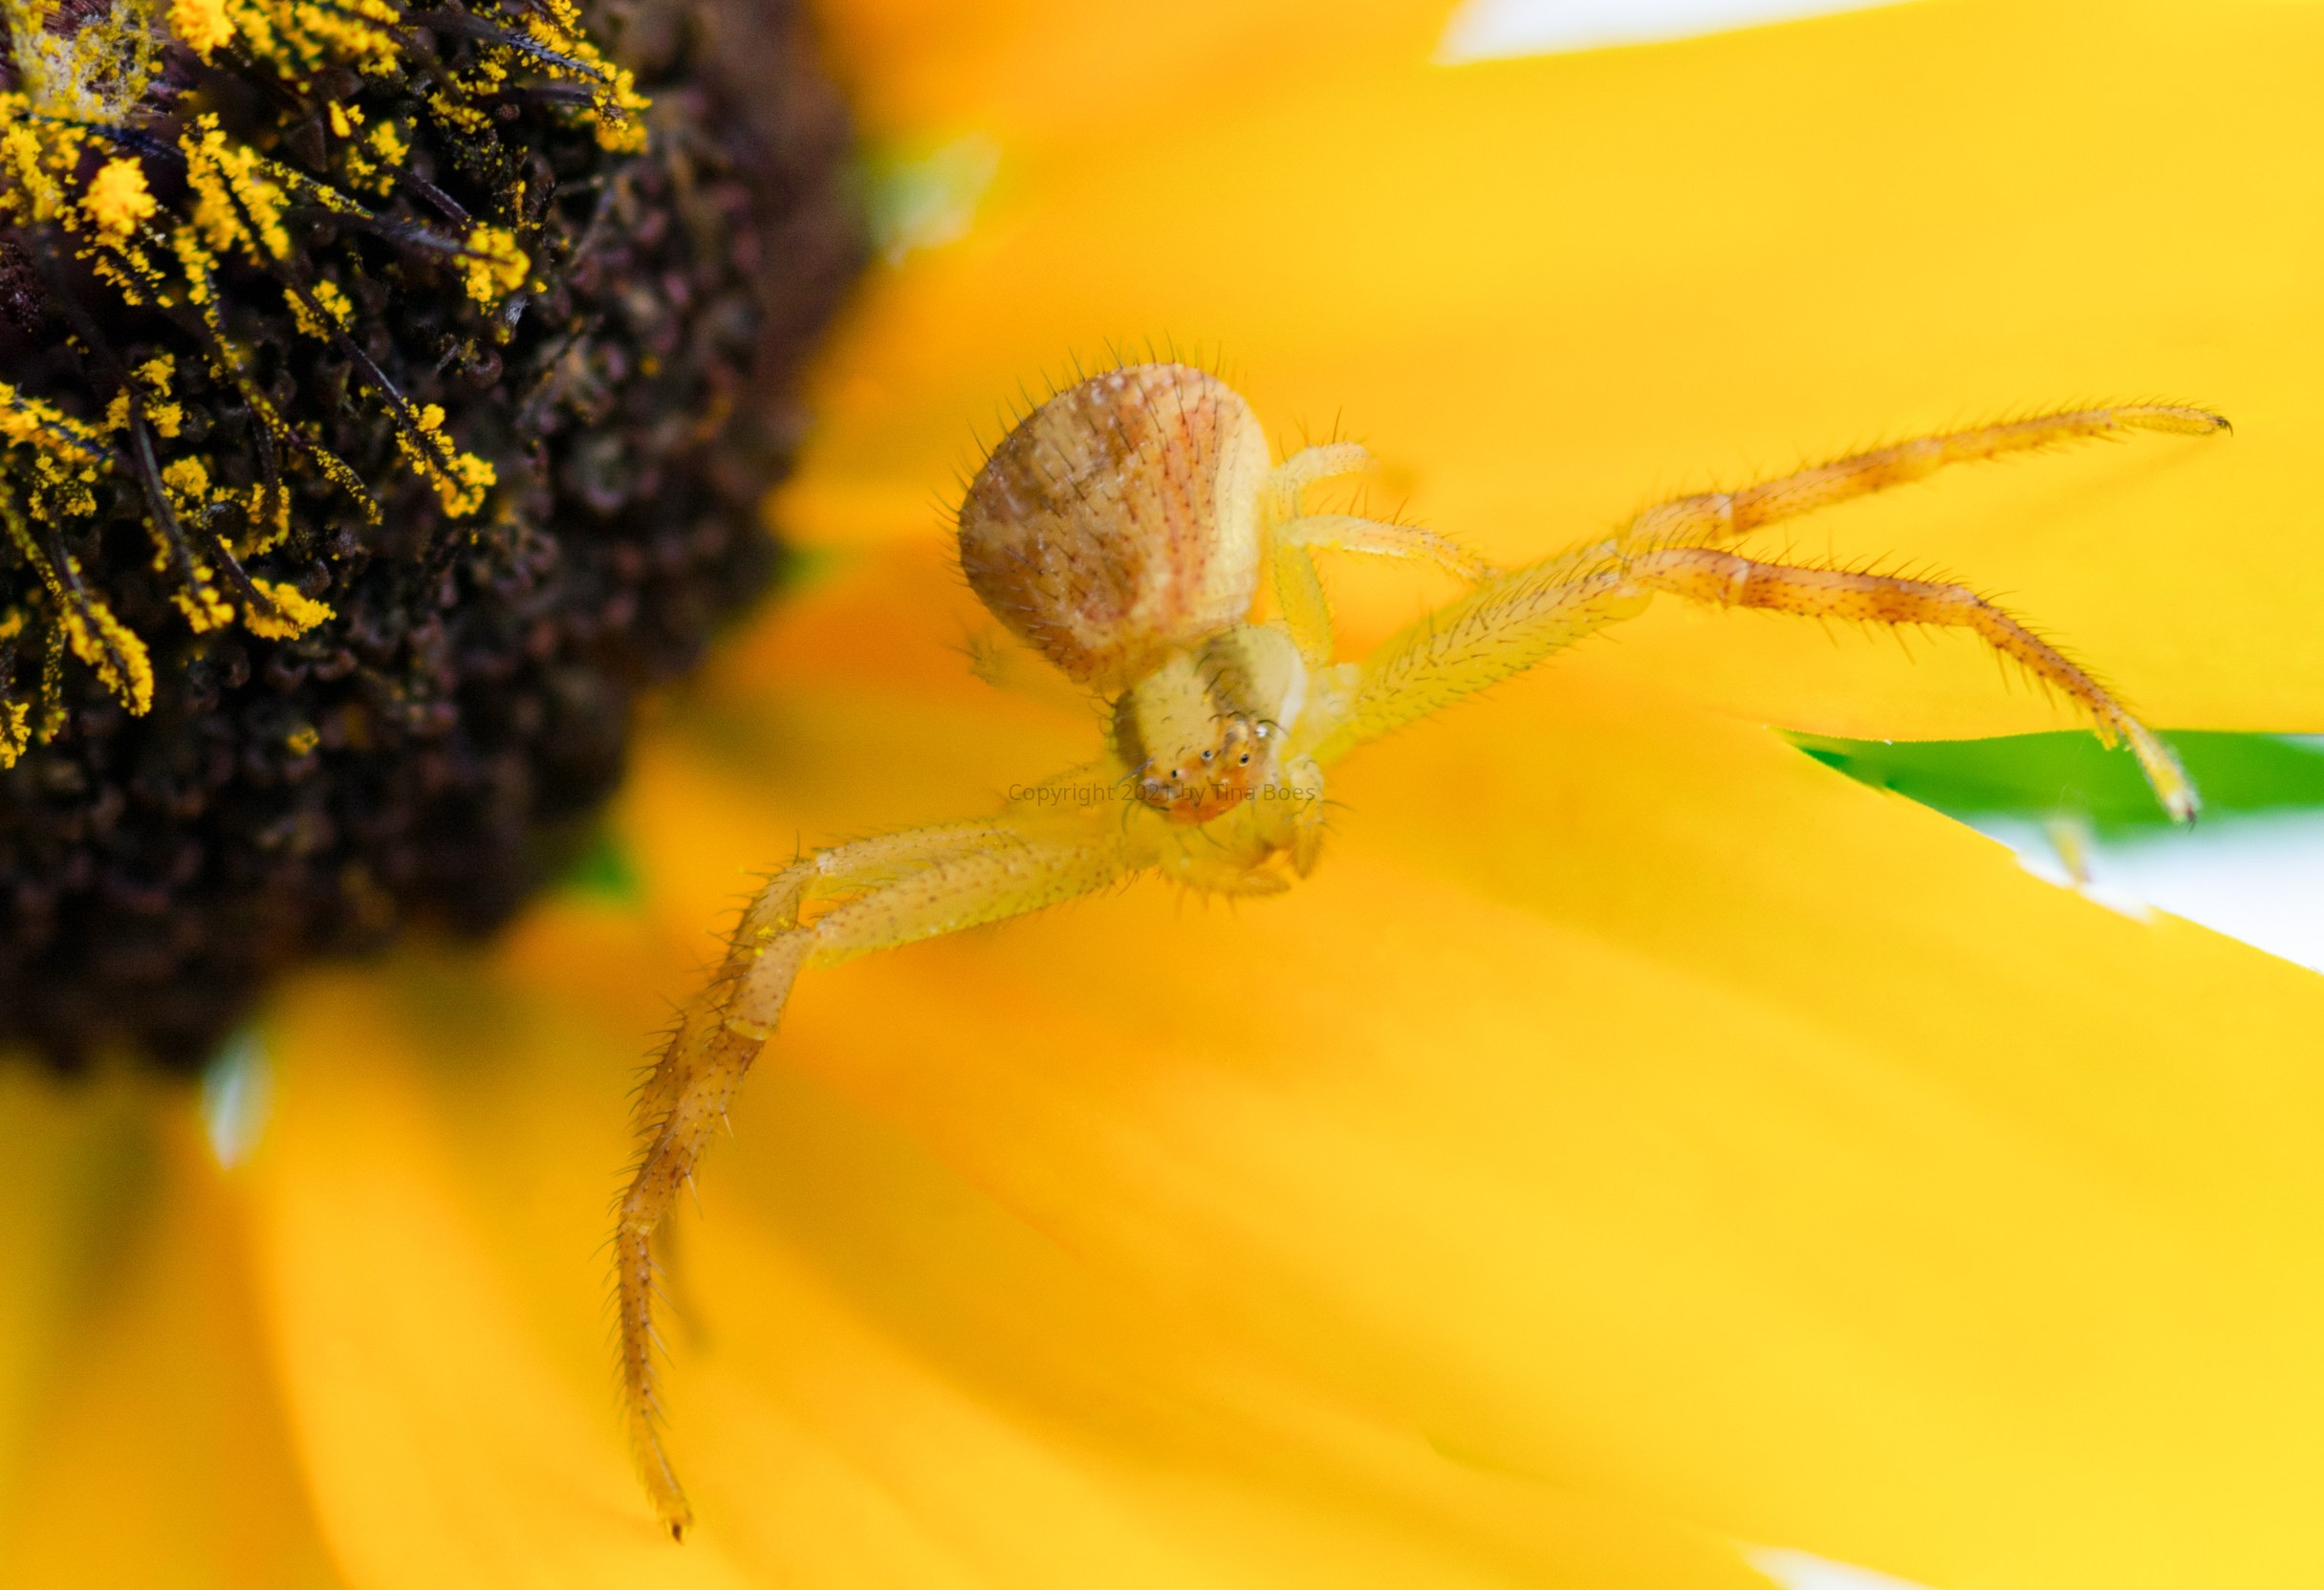 Spider on yellow-2.jpg